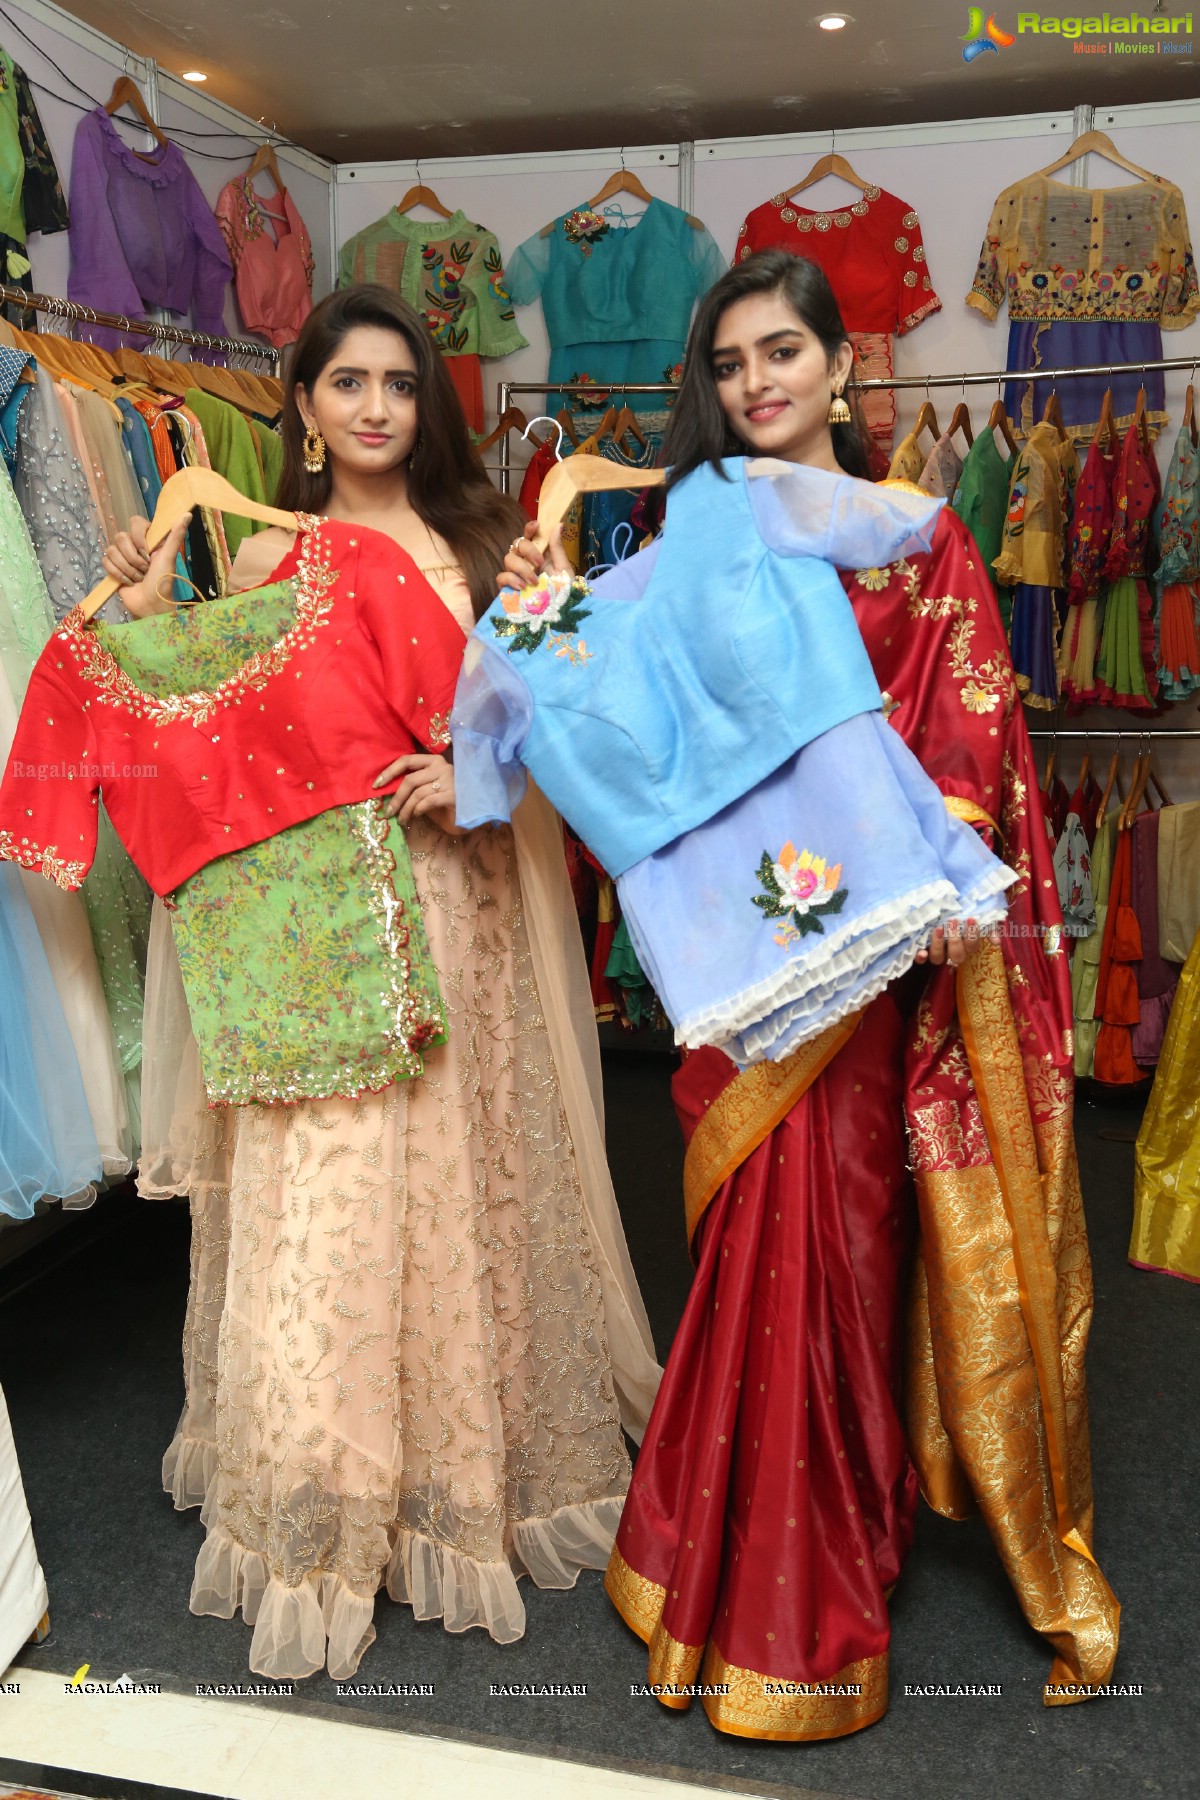 Poppy Petals Exhibition & Sale Kick Starts at Taj Krishna, Hyderabad